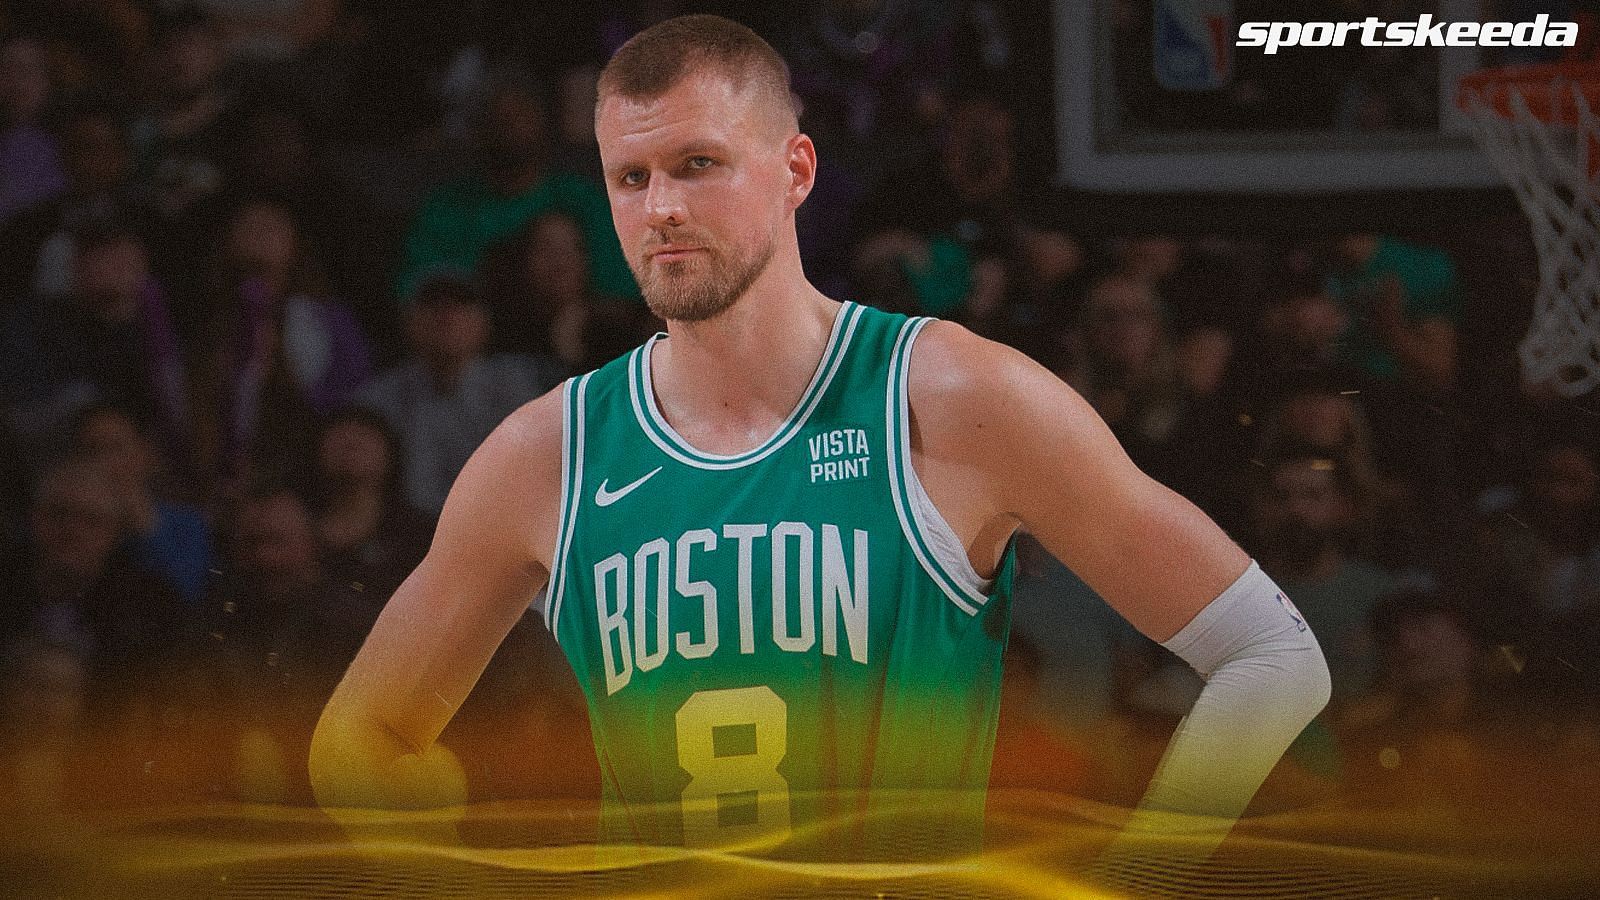 Kristaps Porzingis looks like his best self in a Boston Celtics uniform this season